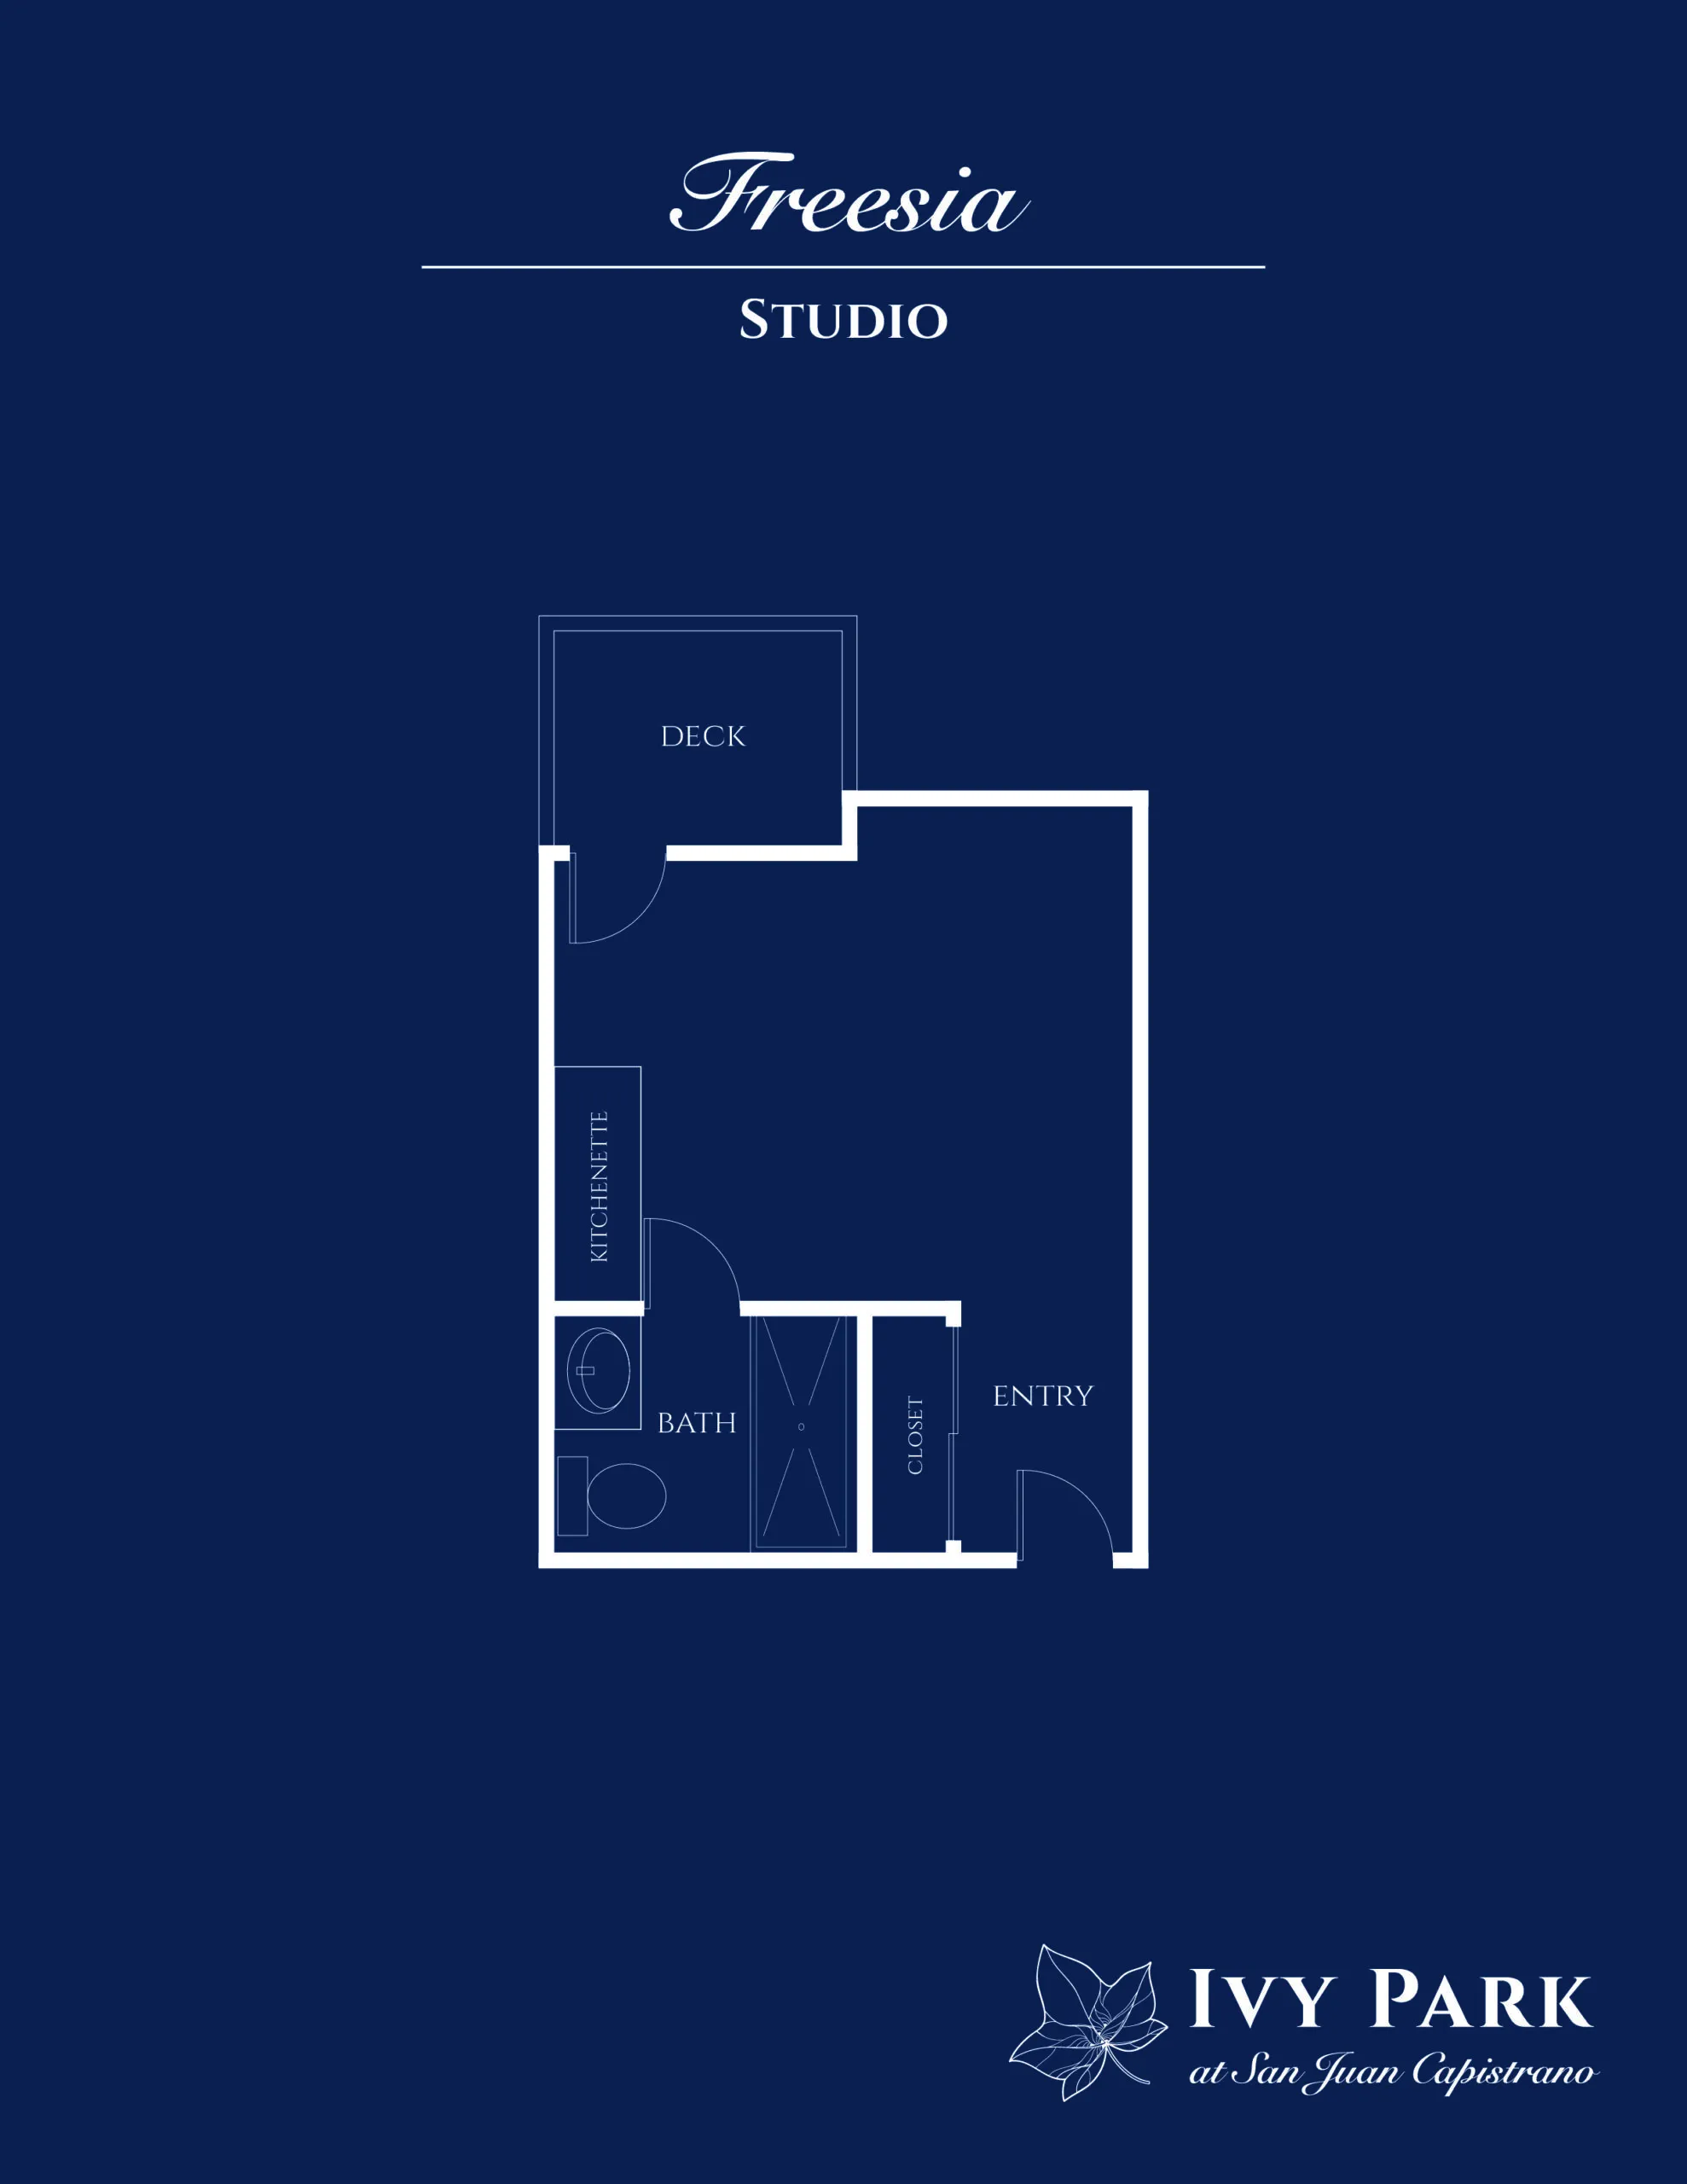 Floor plans for the Freesia Studio.